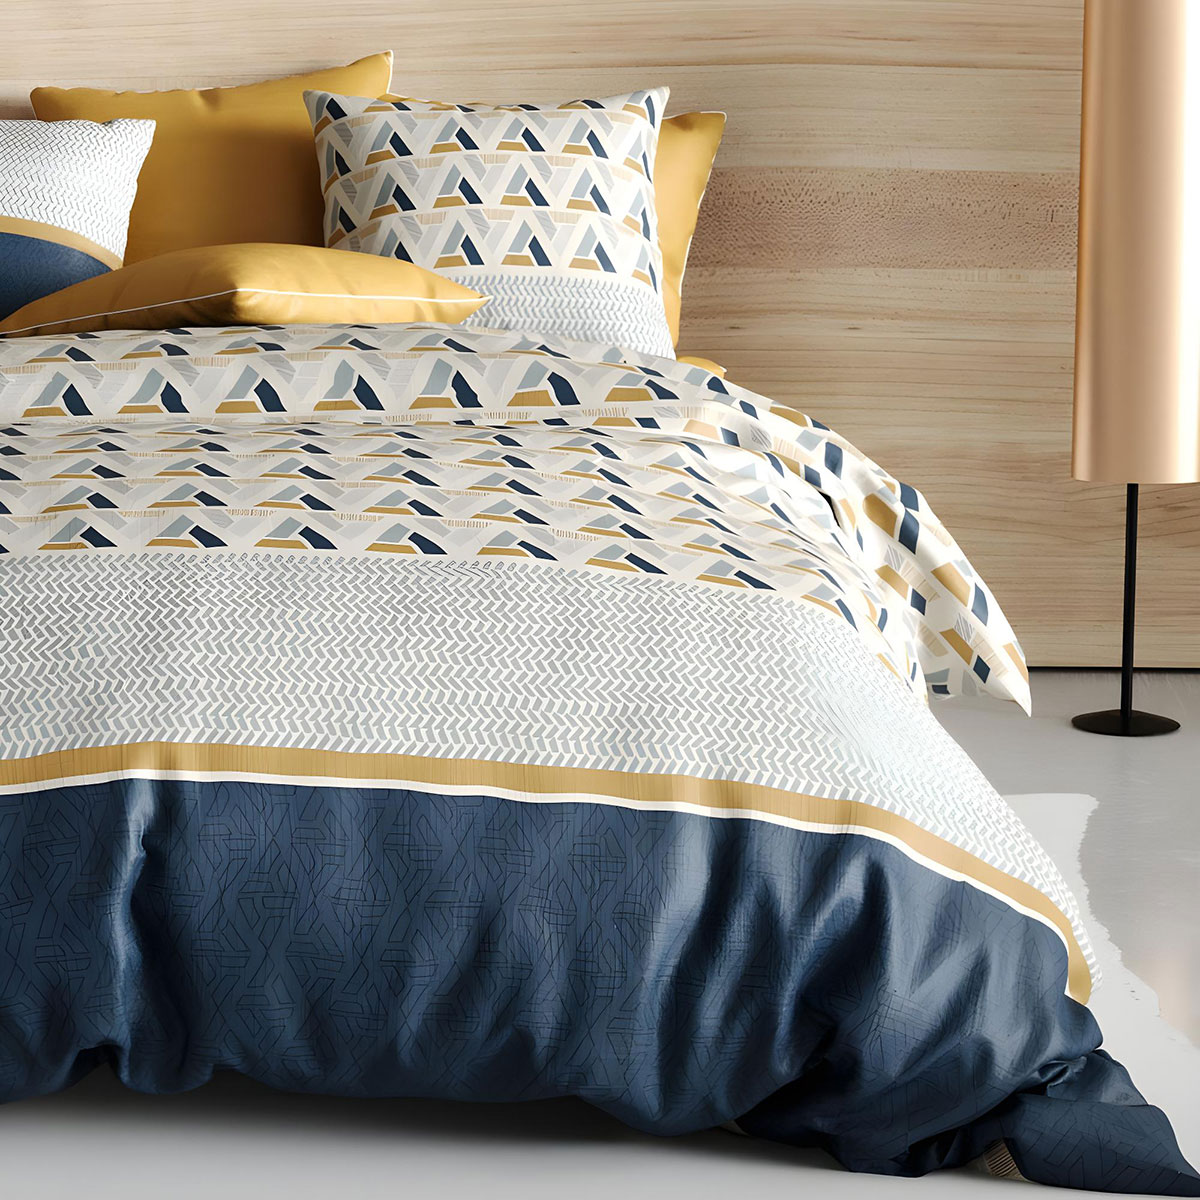 Arcane bedding set 220 x 240 cm